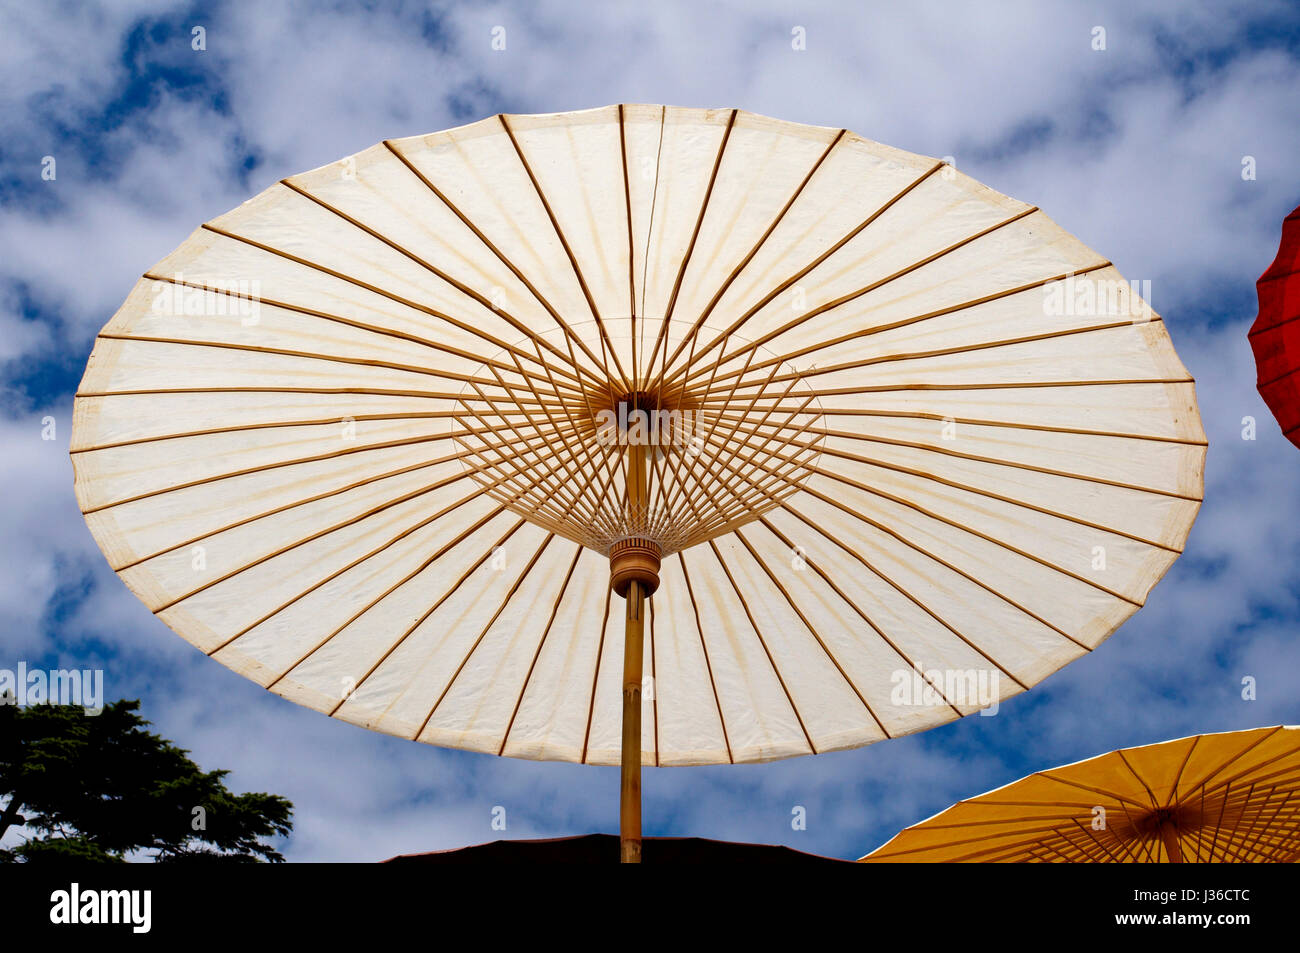 Colorful white sun umbrella against a blue sky Stock Photo